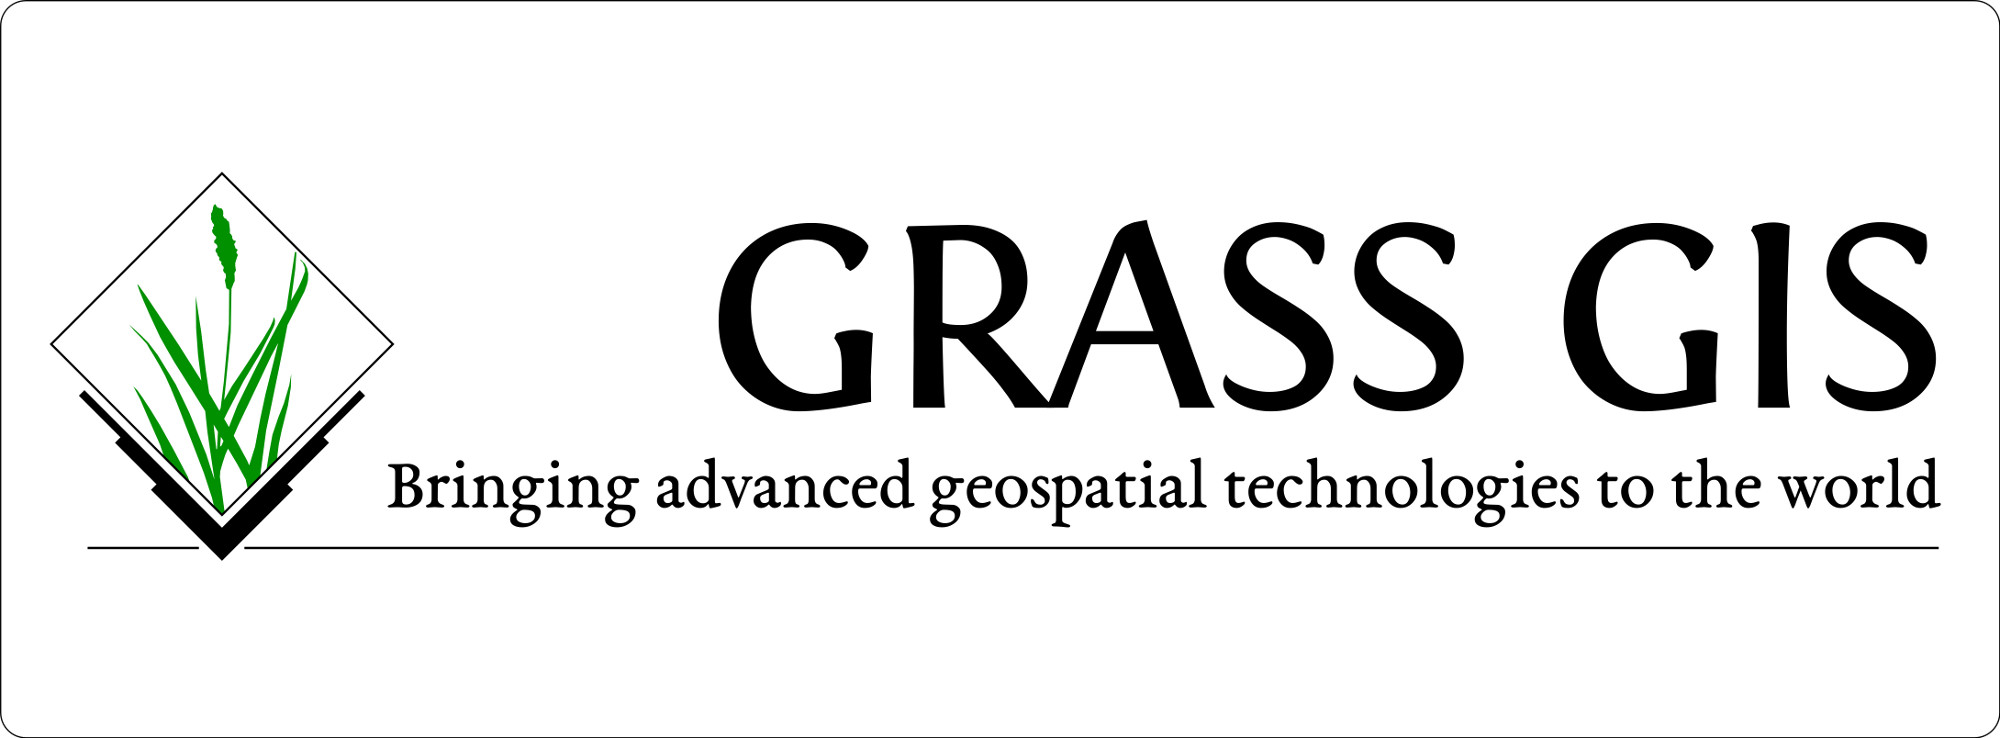 GRASSGIS splash1.jpg